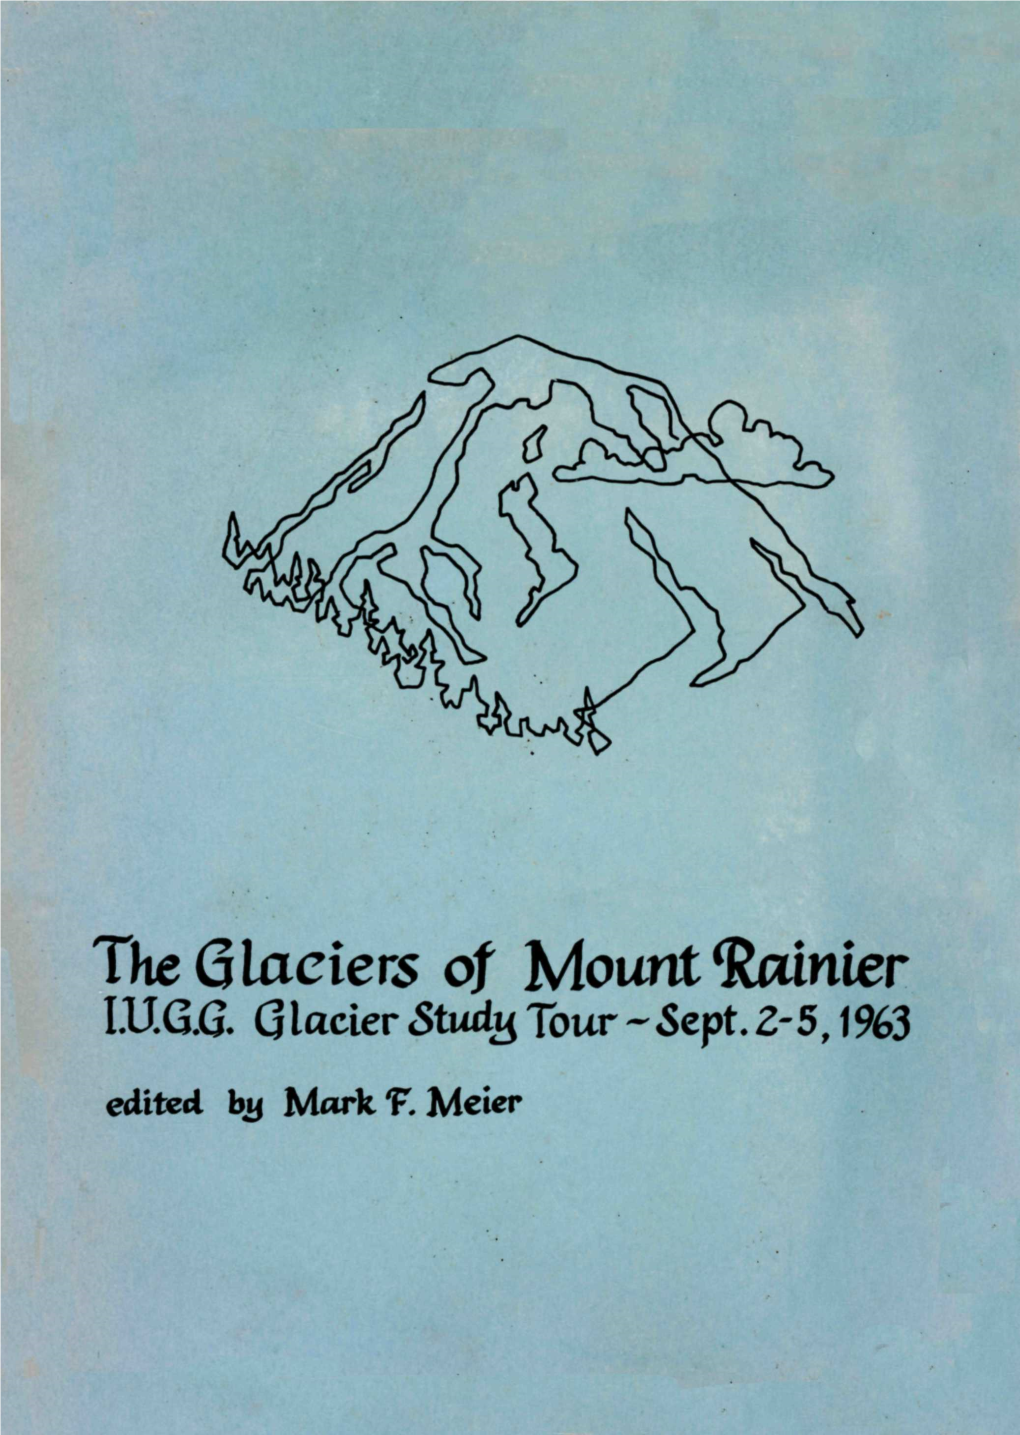 The Glaciers of Mount'rainier I.U.G.G